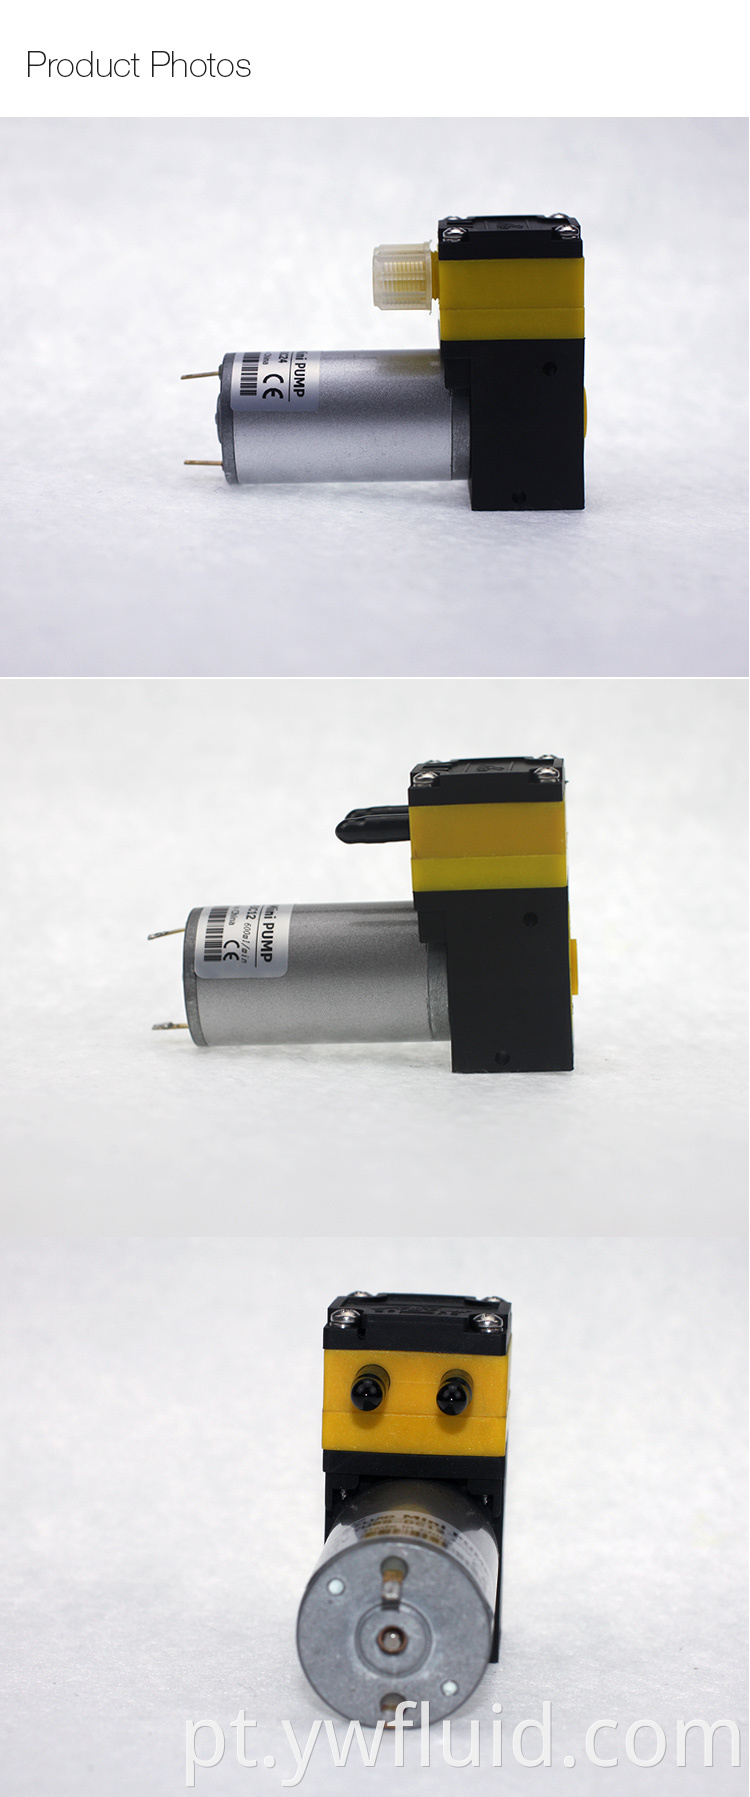 Bomba de micro diafragma YWfluid para impressora a jato de tinta com taxa de fluxo 600ml / min usada para impressão a jato de tinta